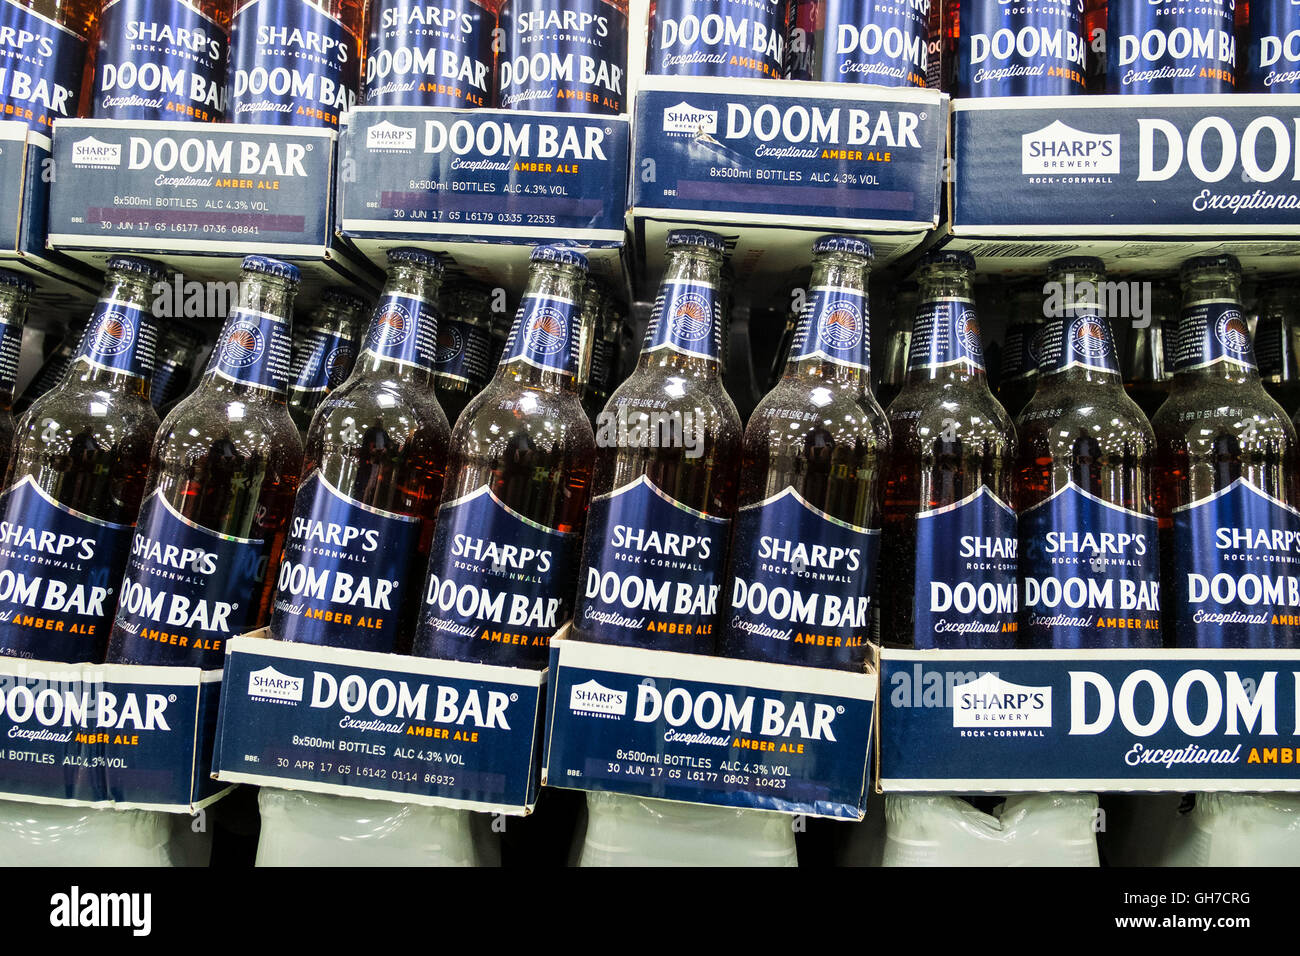 Doom bar beer -Fotos und -Bildmaterial in hoher Auflösung – Alamy